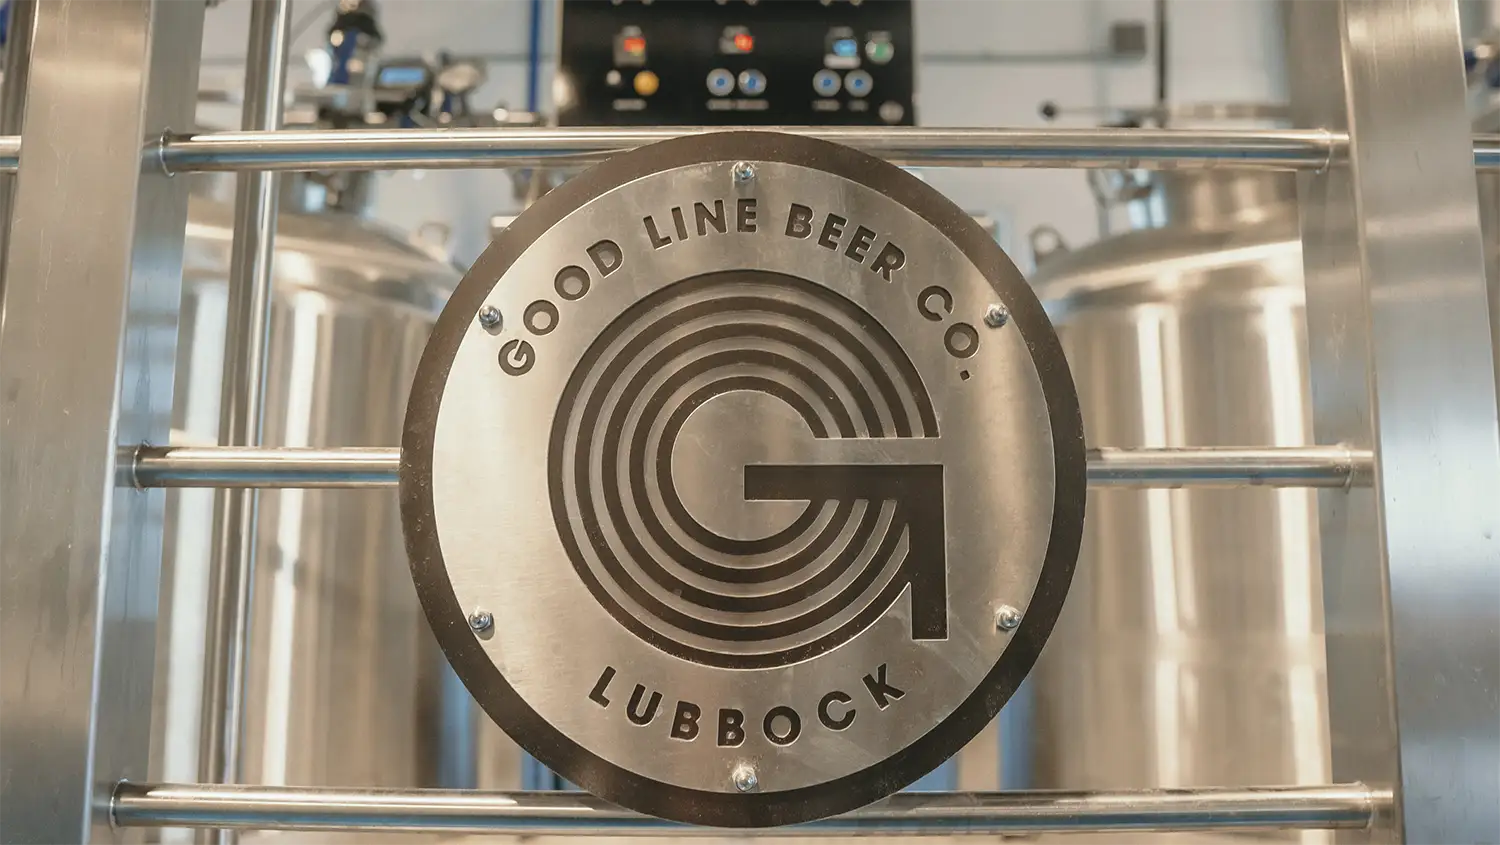 Good lIne Beer Co Lubbock metal engraved sign inside brewery